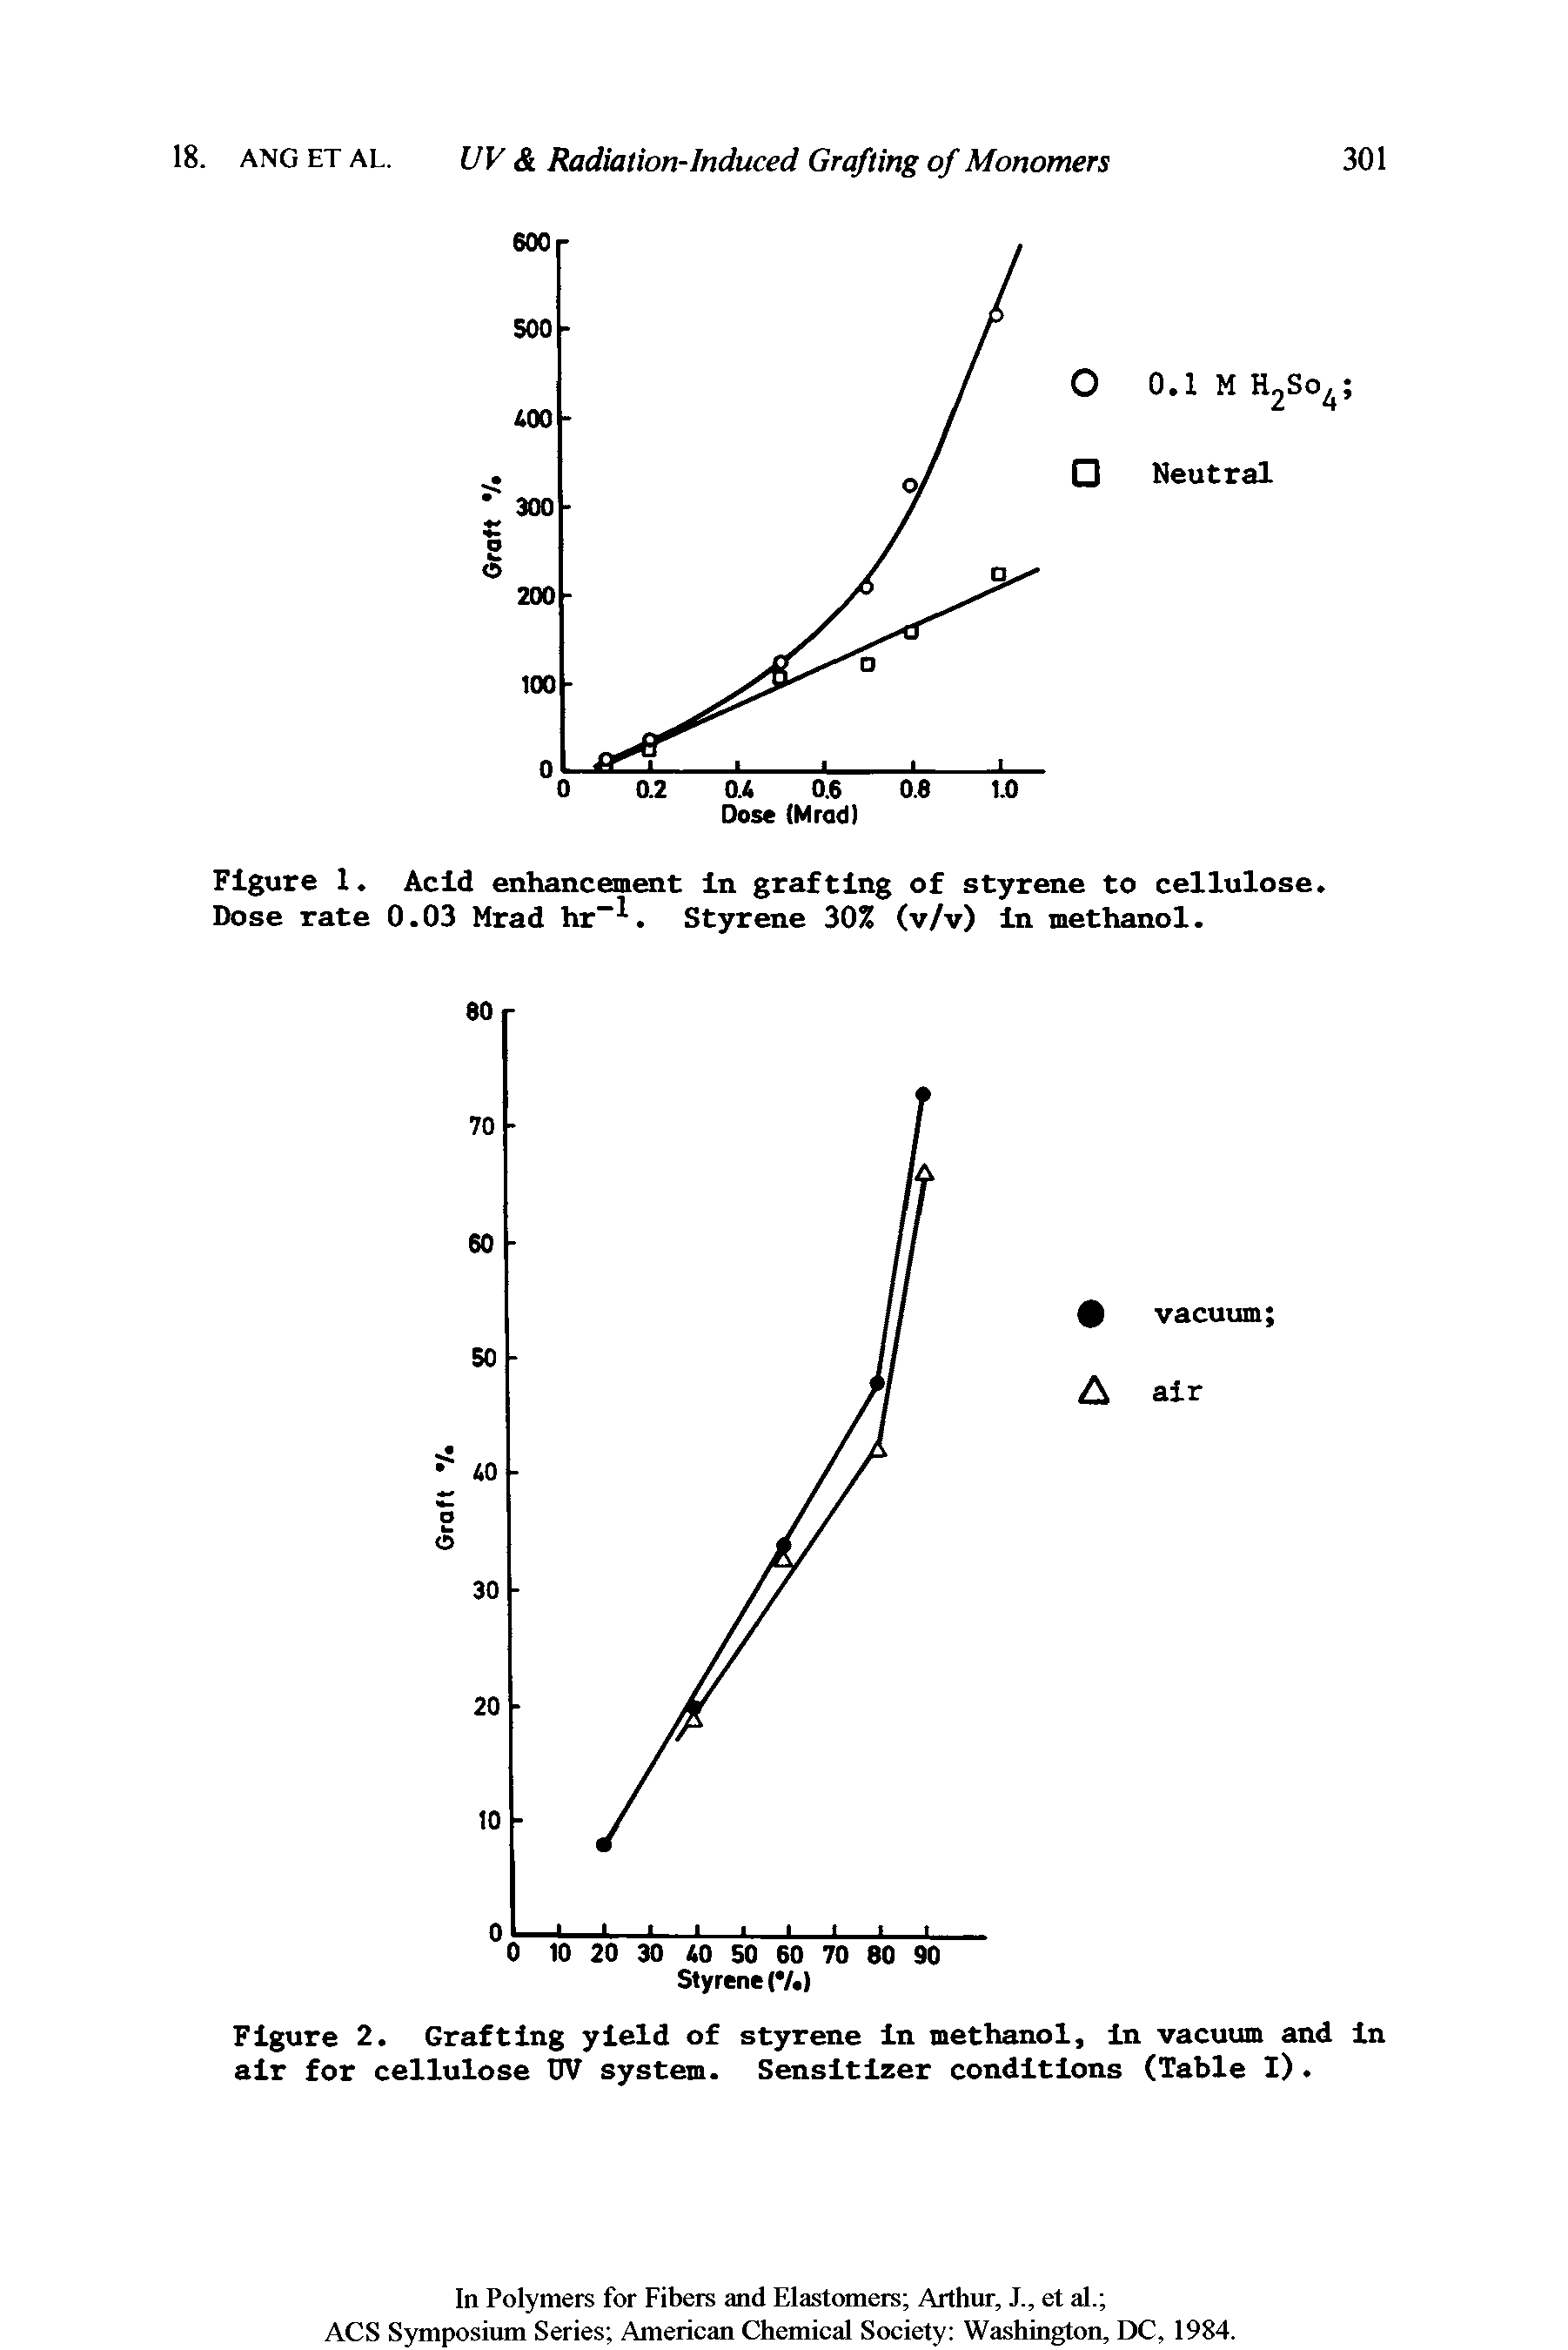 Figure 1. Acid enhancement In grafting of styrene to cellulose. Dose rate 0.03 Mrad hr. Styrene 30% (v/v) In methanol.